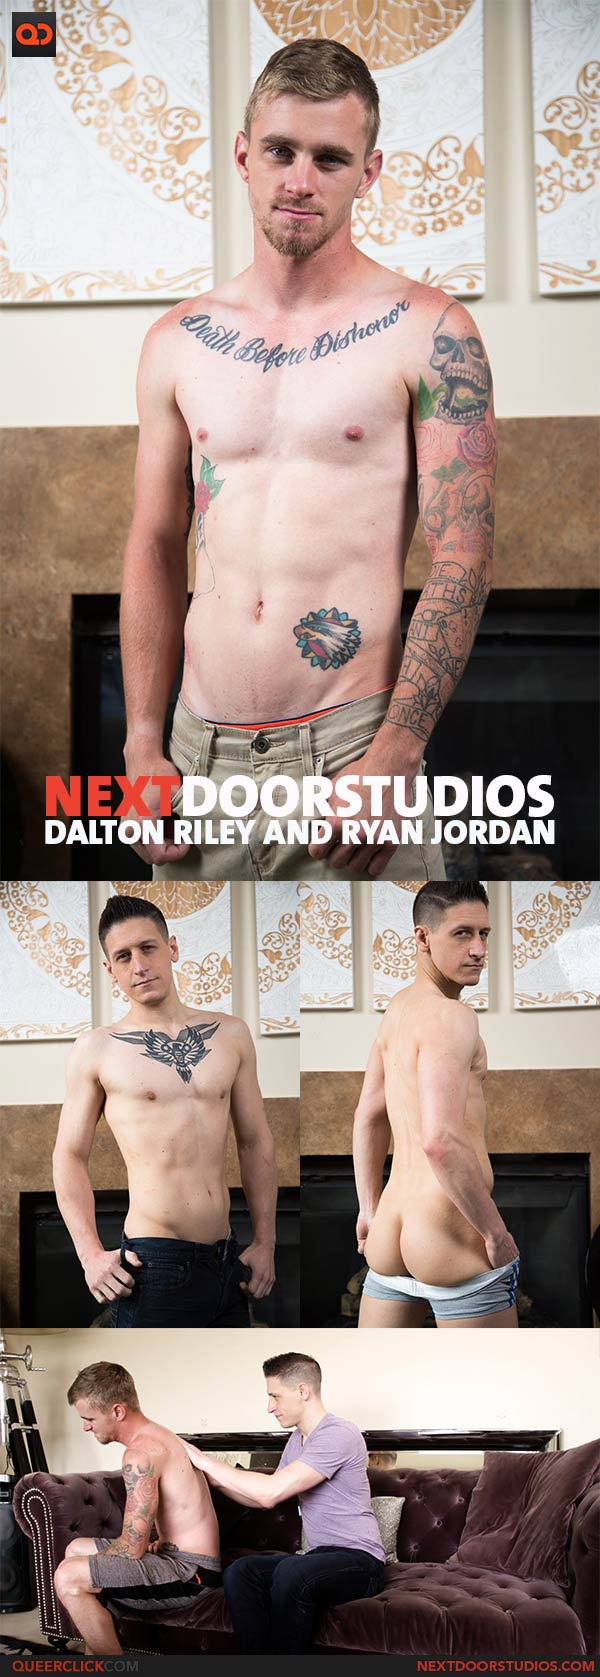 Next Door Studios:  Dalton Riley and Ryan Jordan